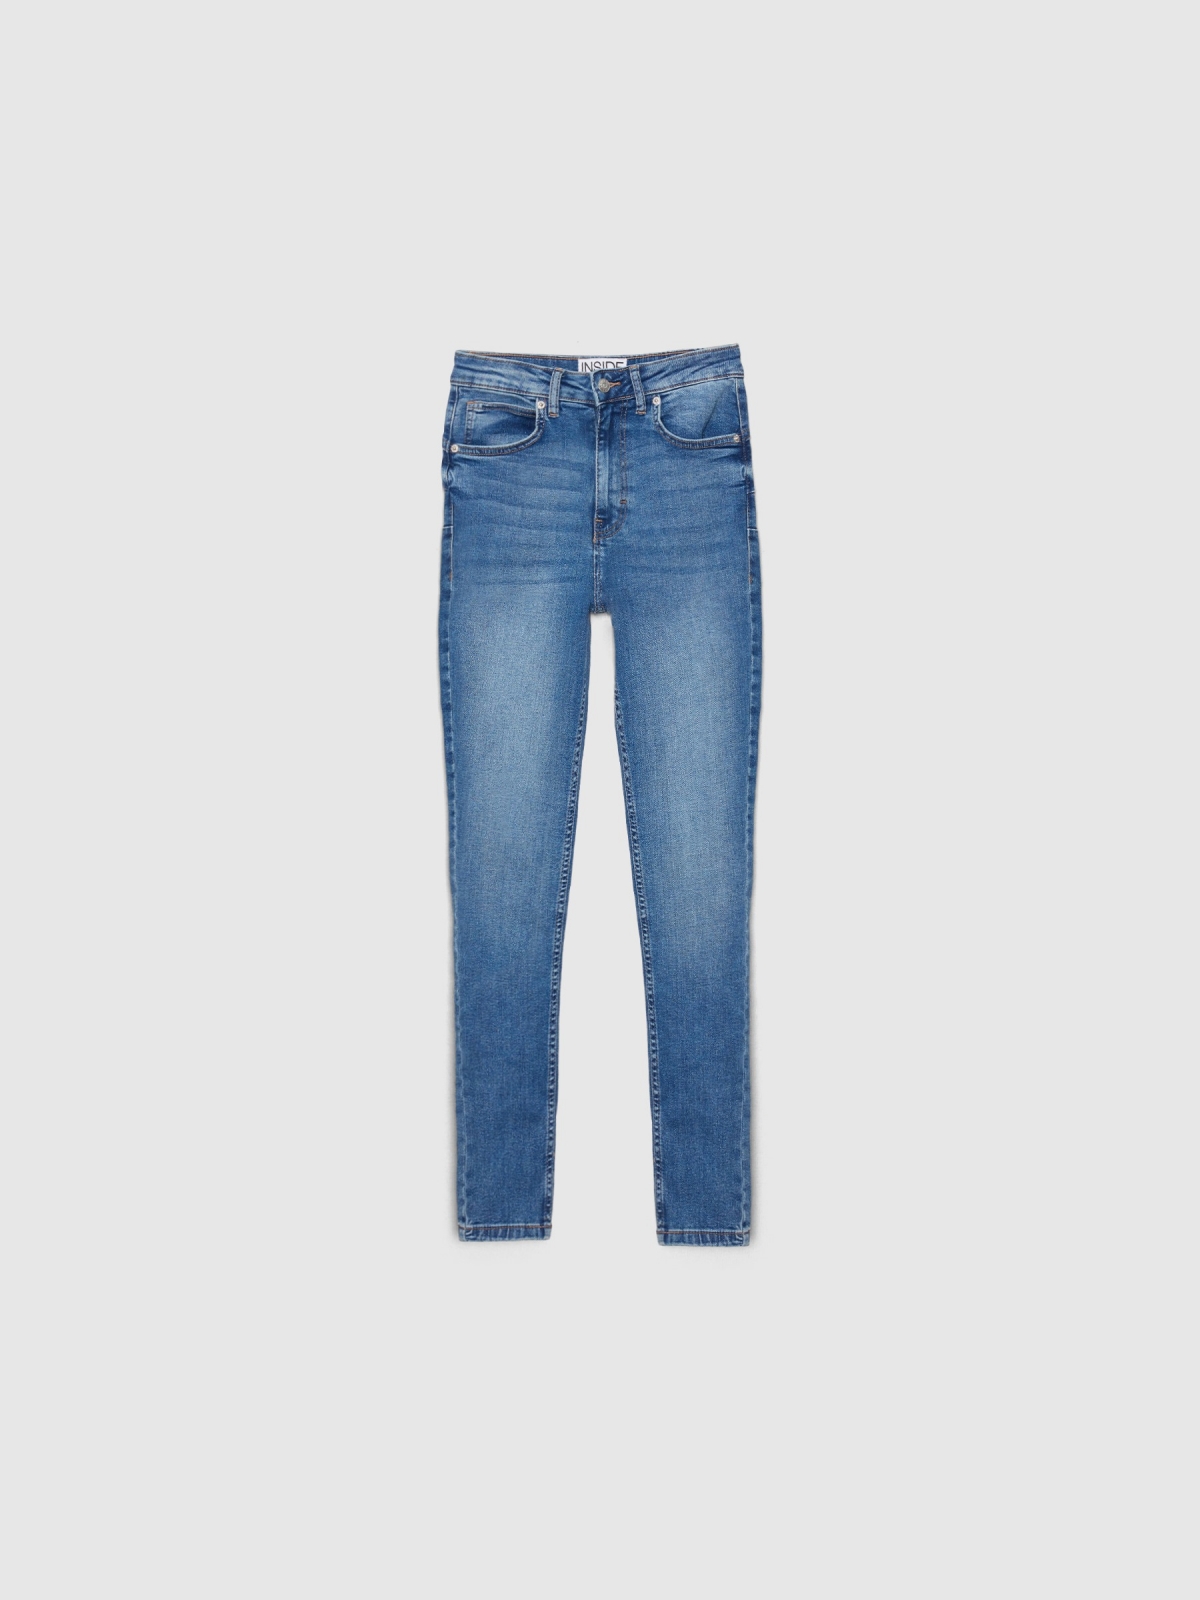  Jeans skinny de cintura subida azul